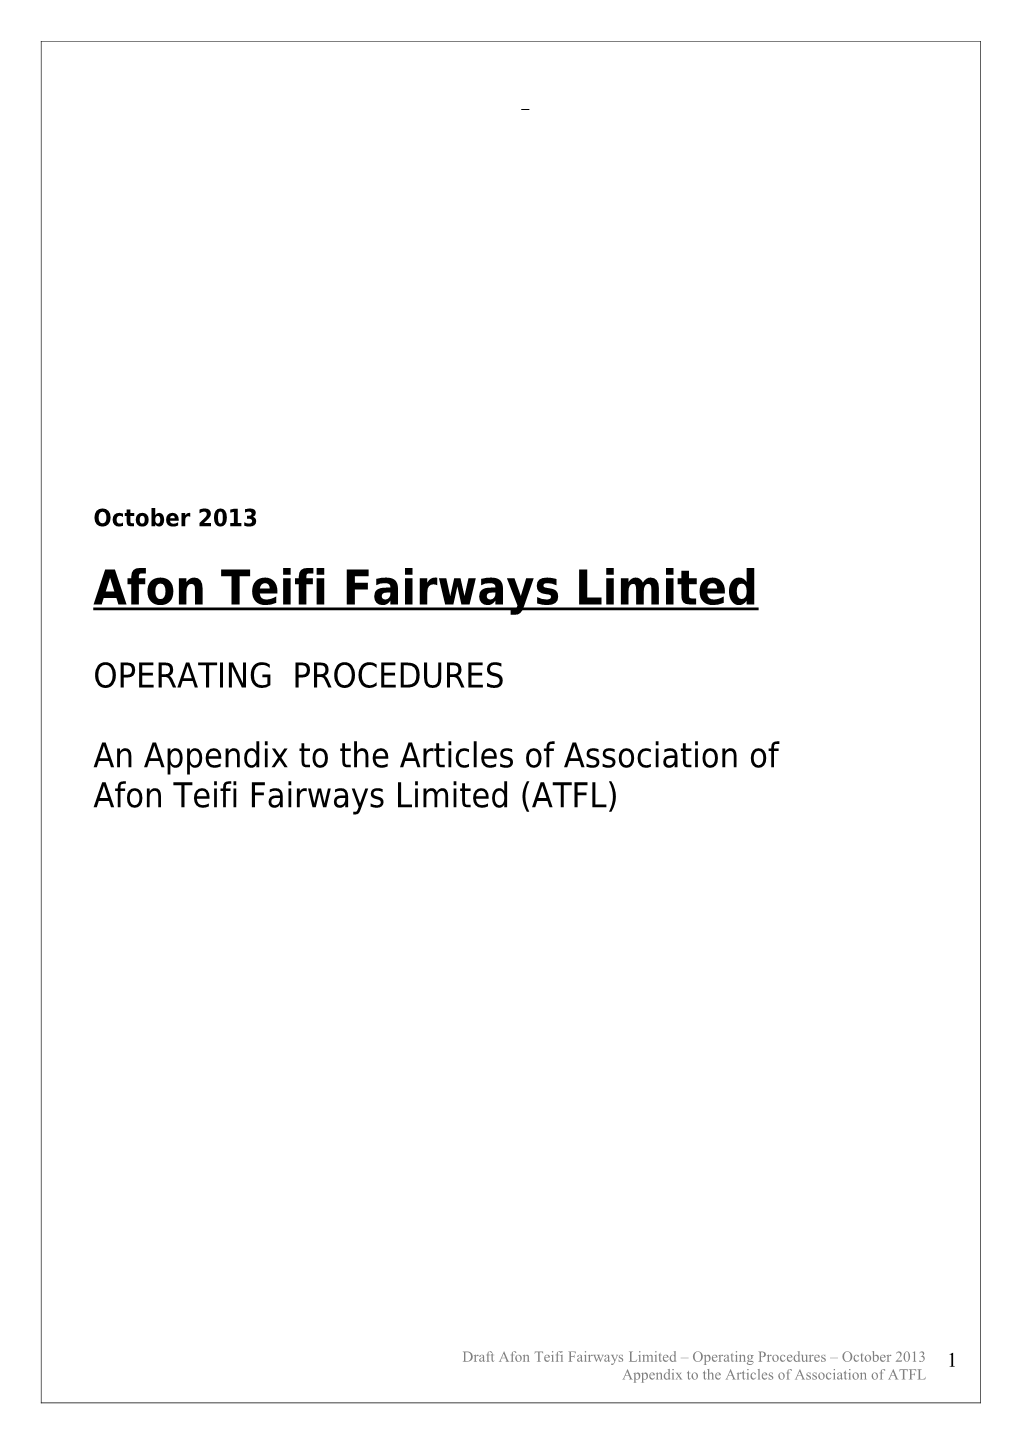 Constitution for the Afon Teifi Fairway Committee